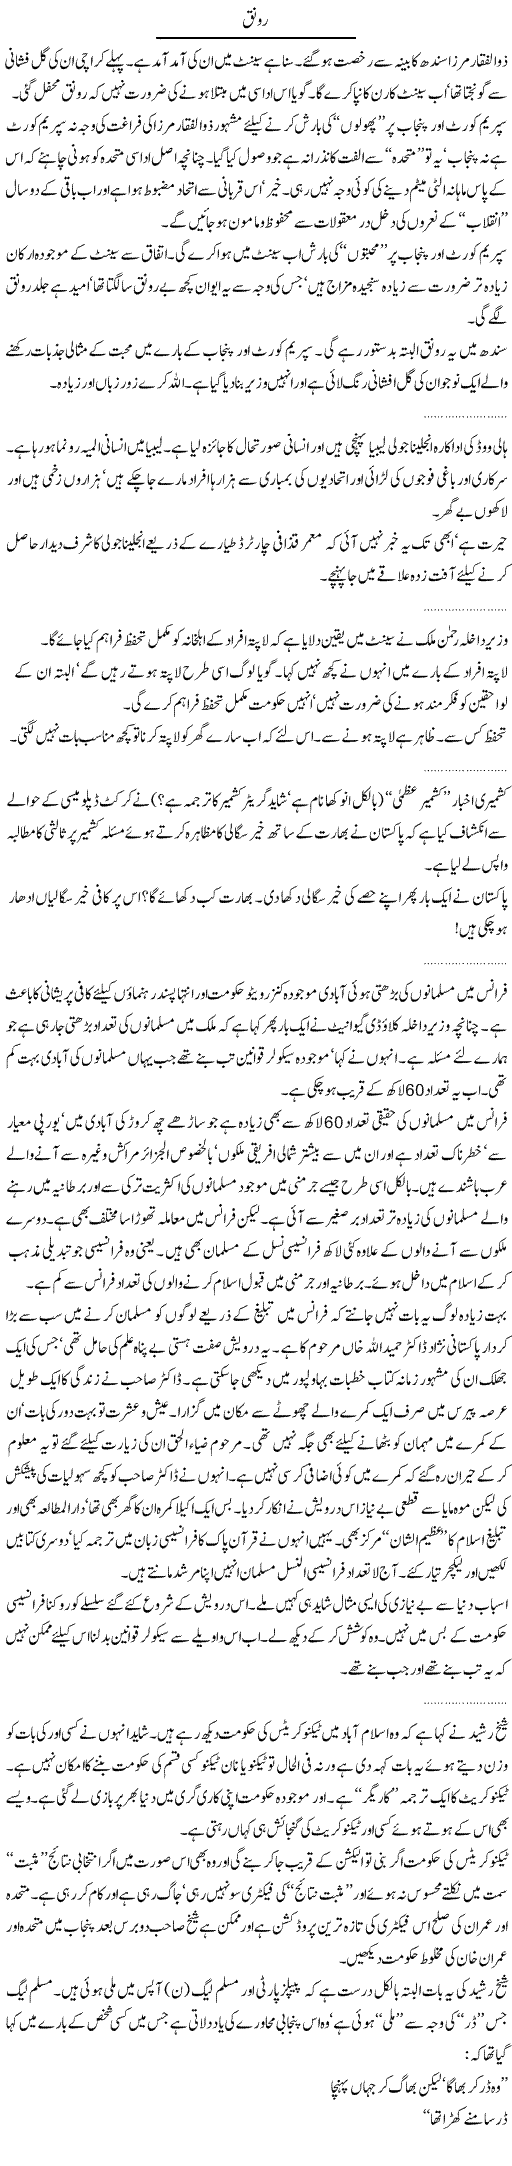 Zulfiqar Mirza Gone Express Column Abdullah Tariq 8 April 2011